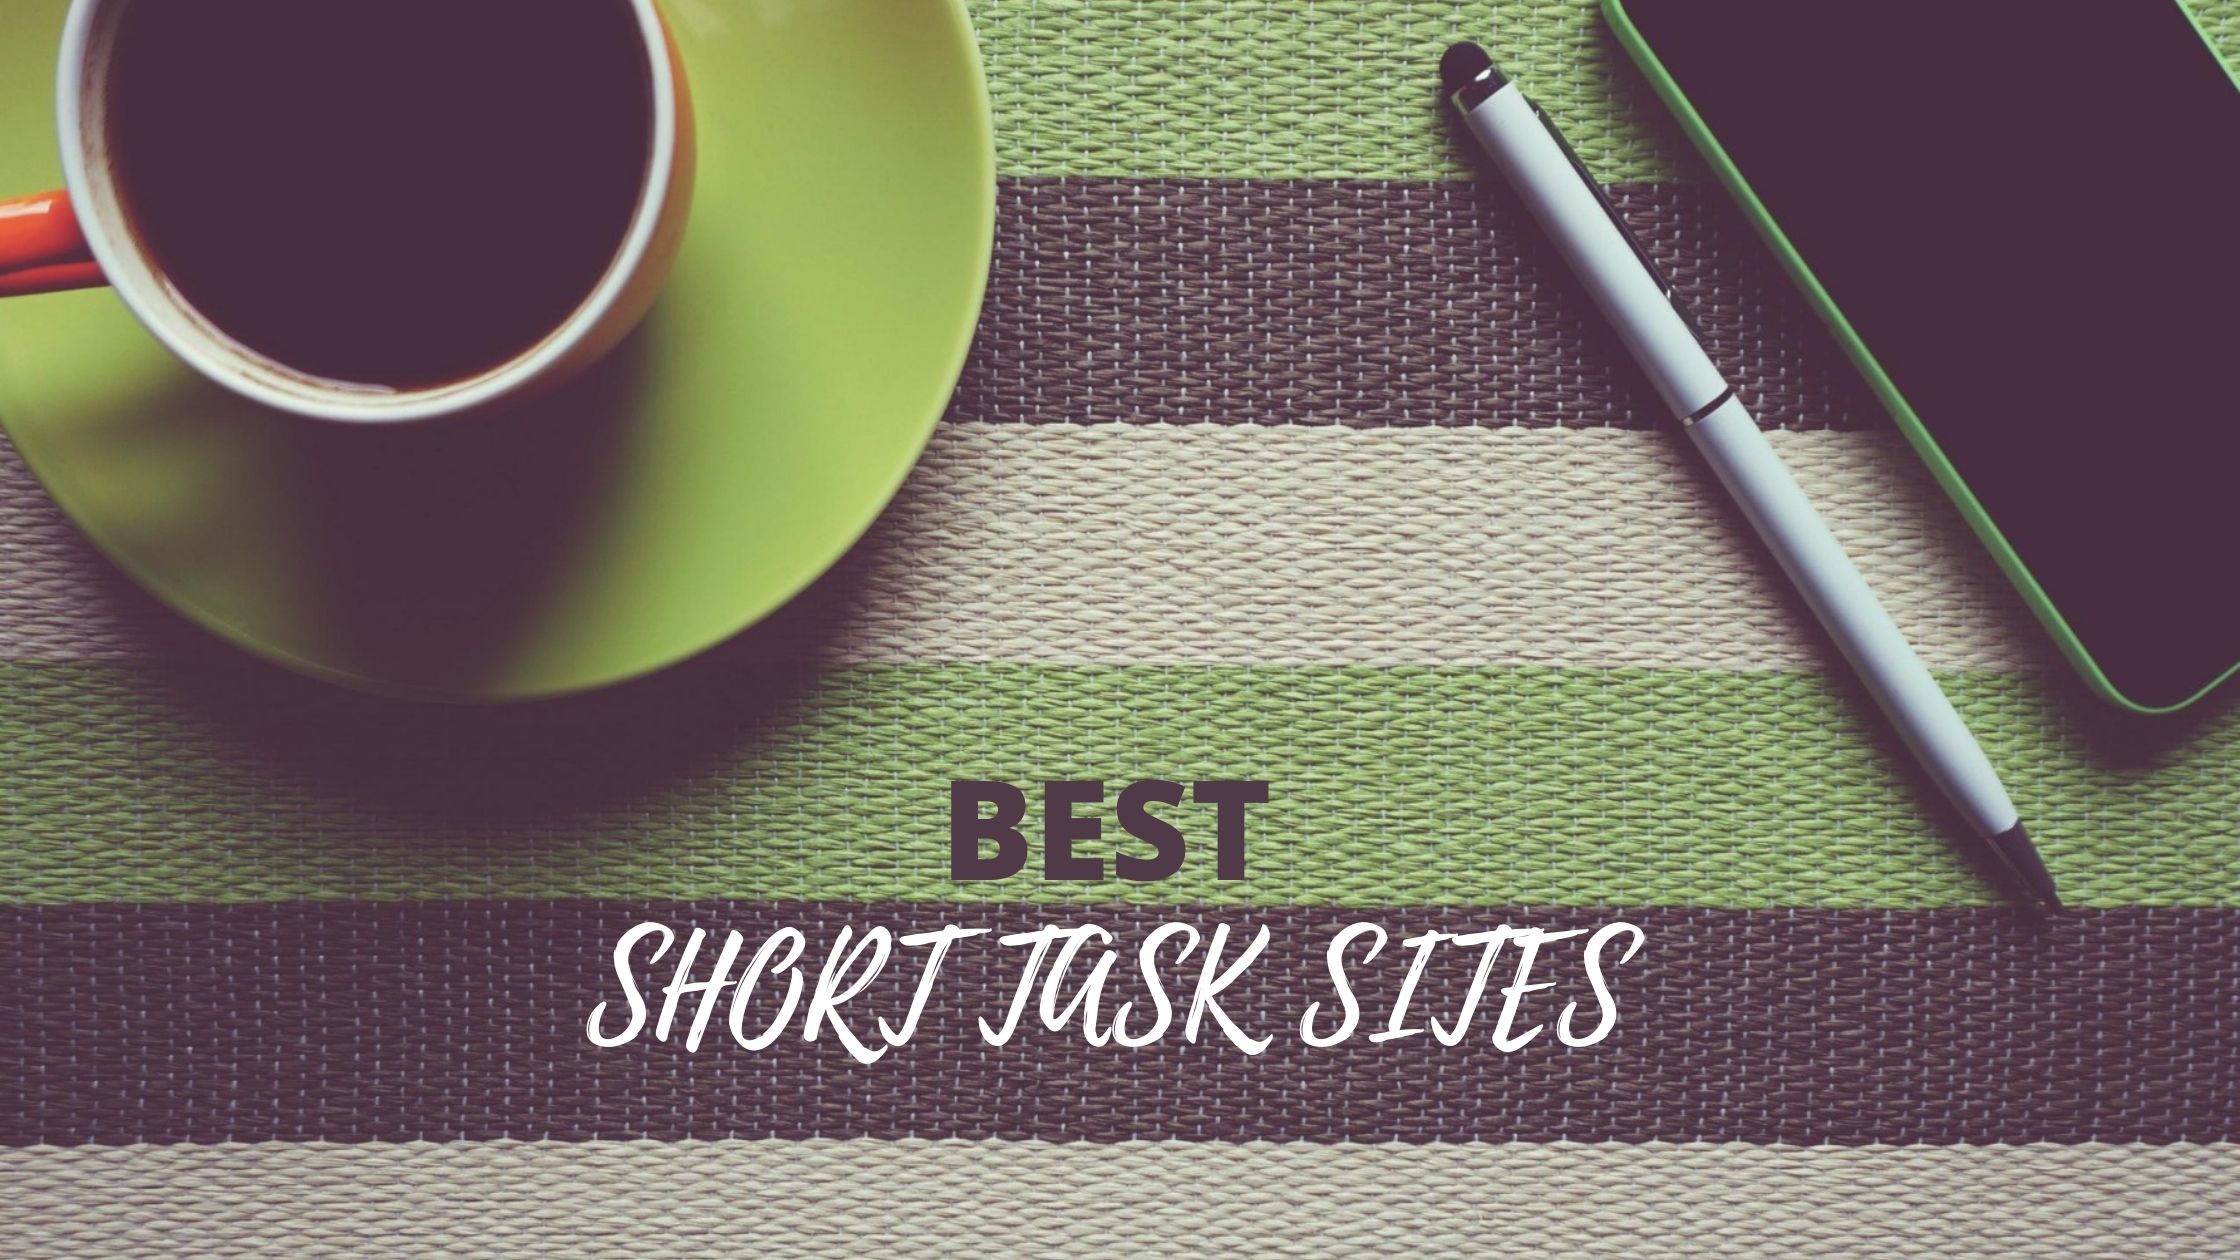 17 Best short task sites